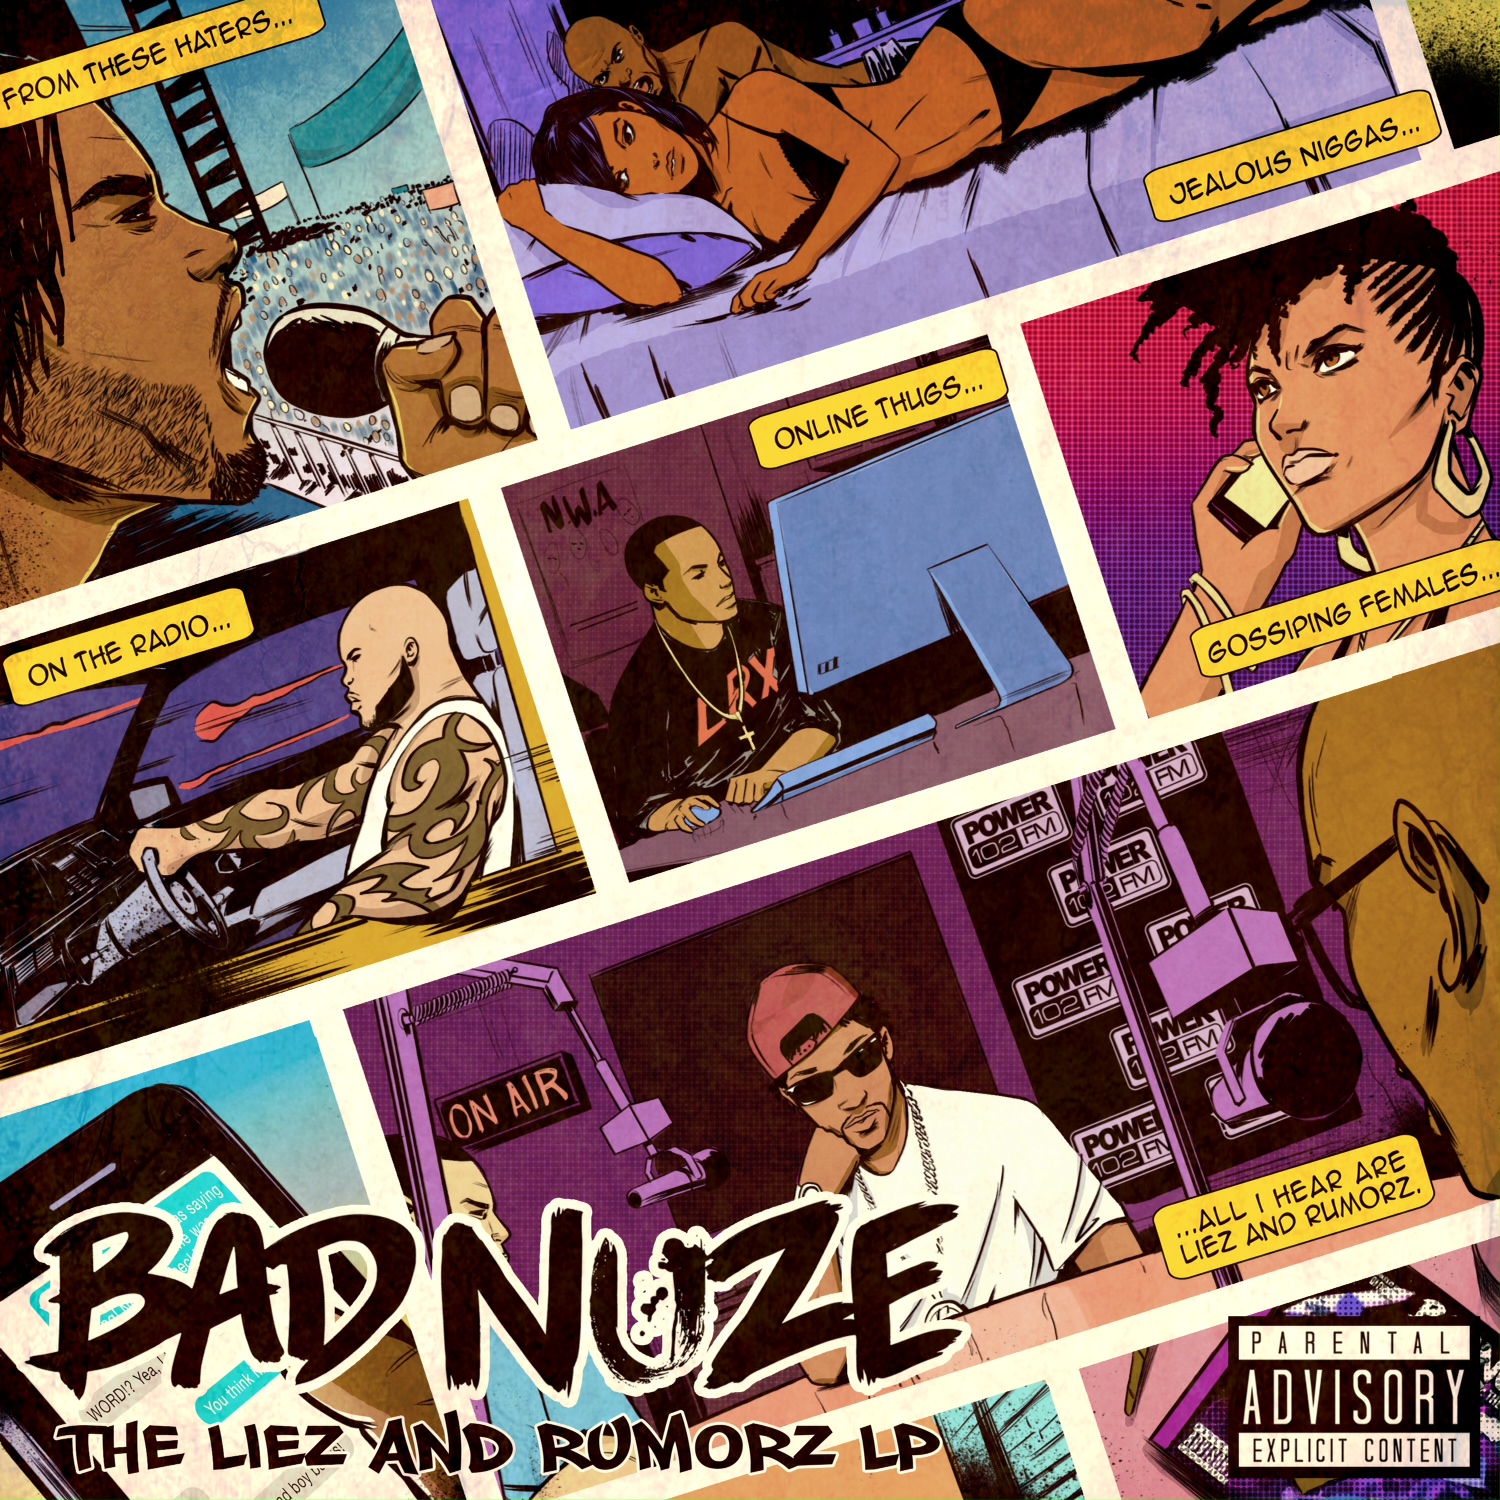 Bad Nuze - "Fight (Remix)" ft. Rapper Big Pooh & CyHi The Prynce